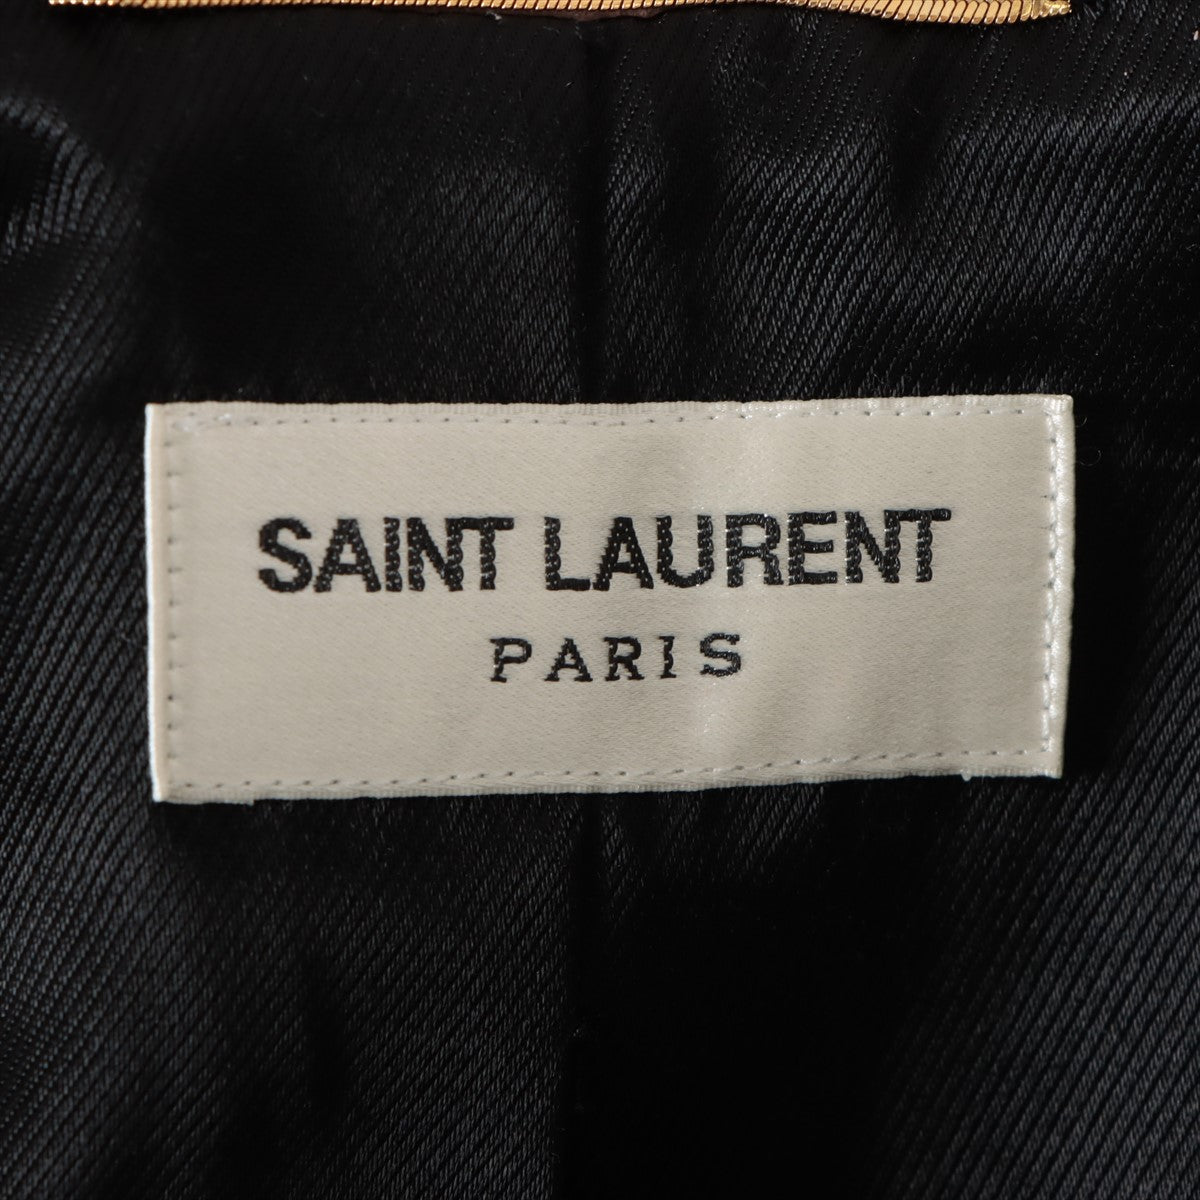 Saint Laurent 19 歲夾克 F34 粉色米色 578545 Flintz